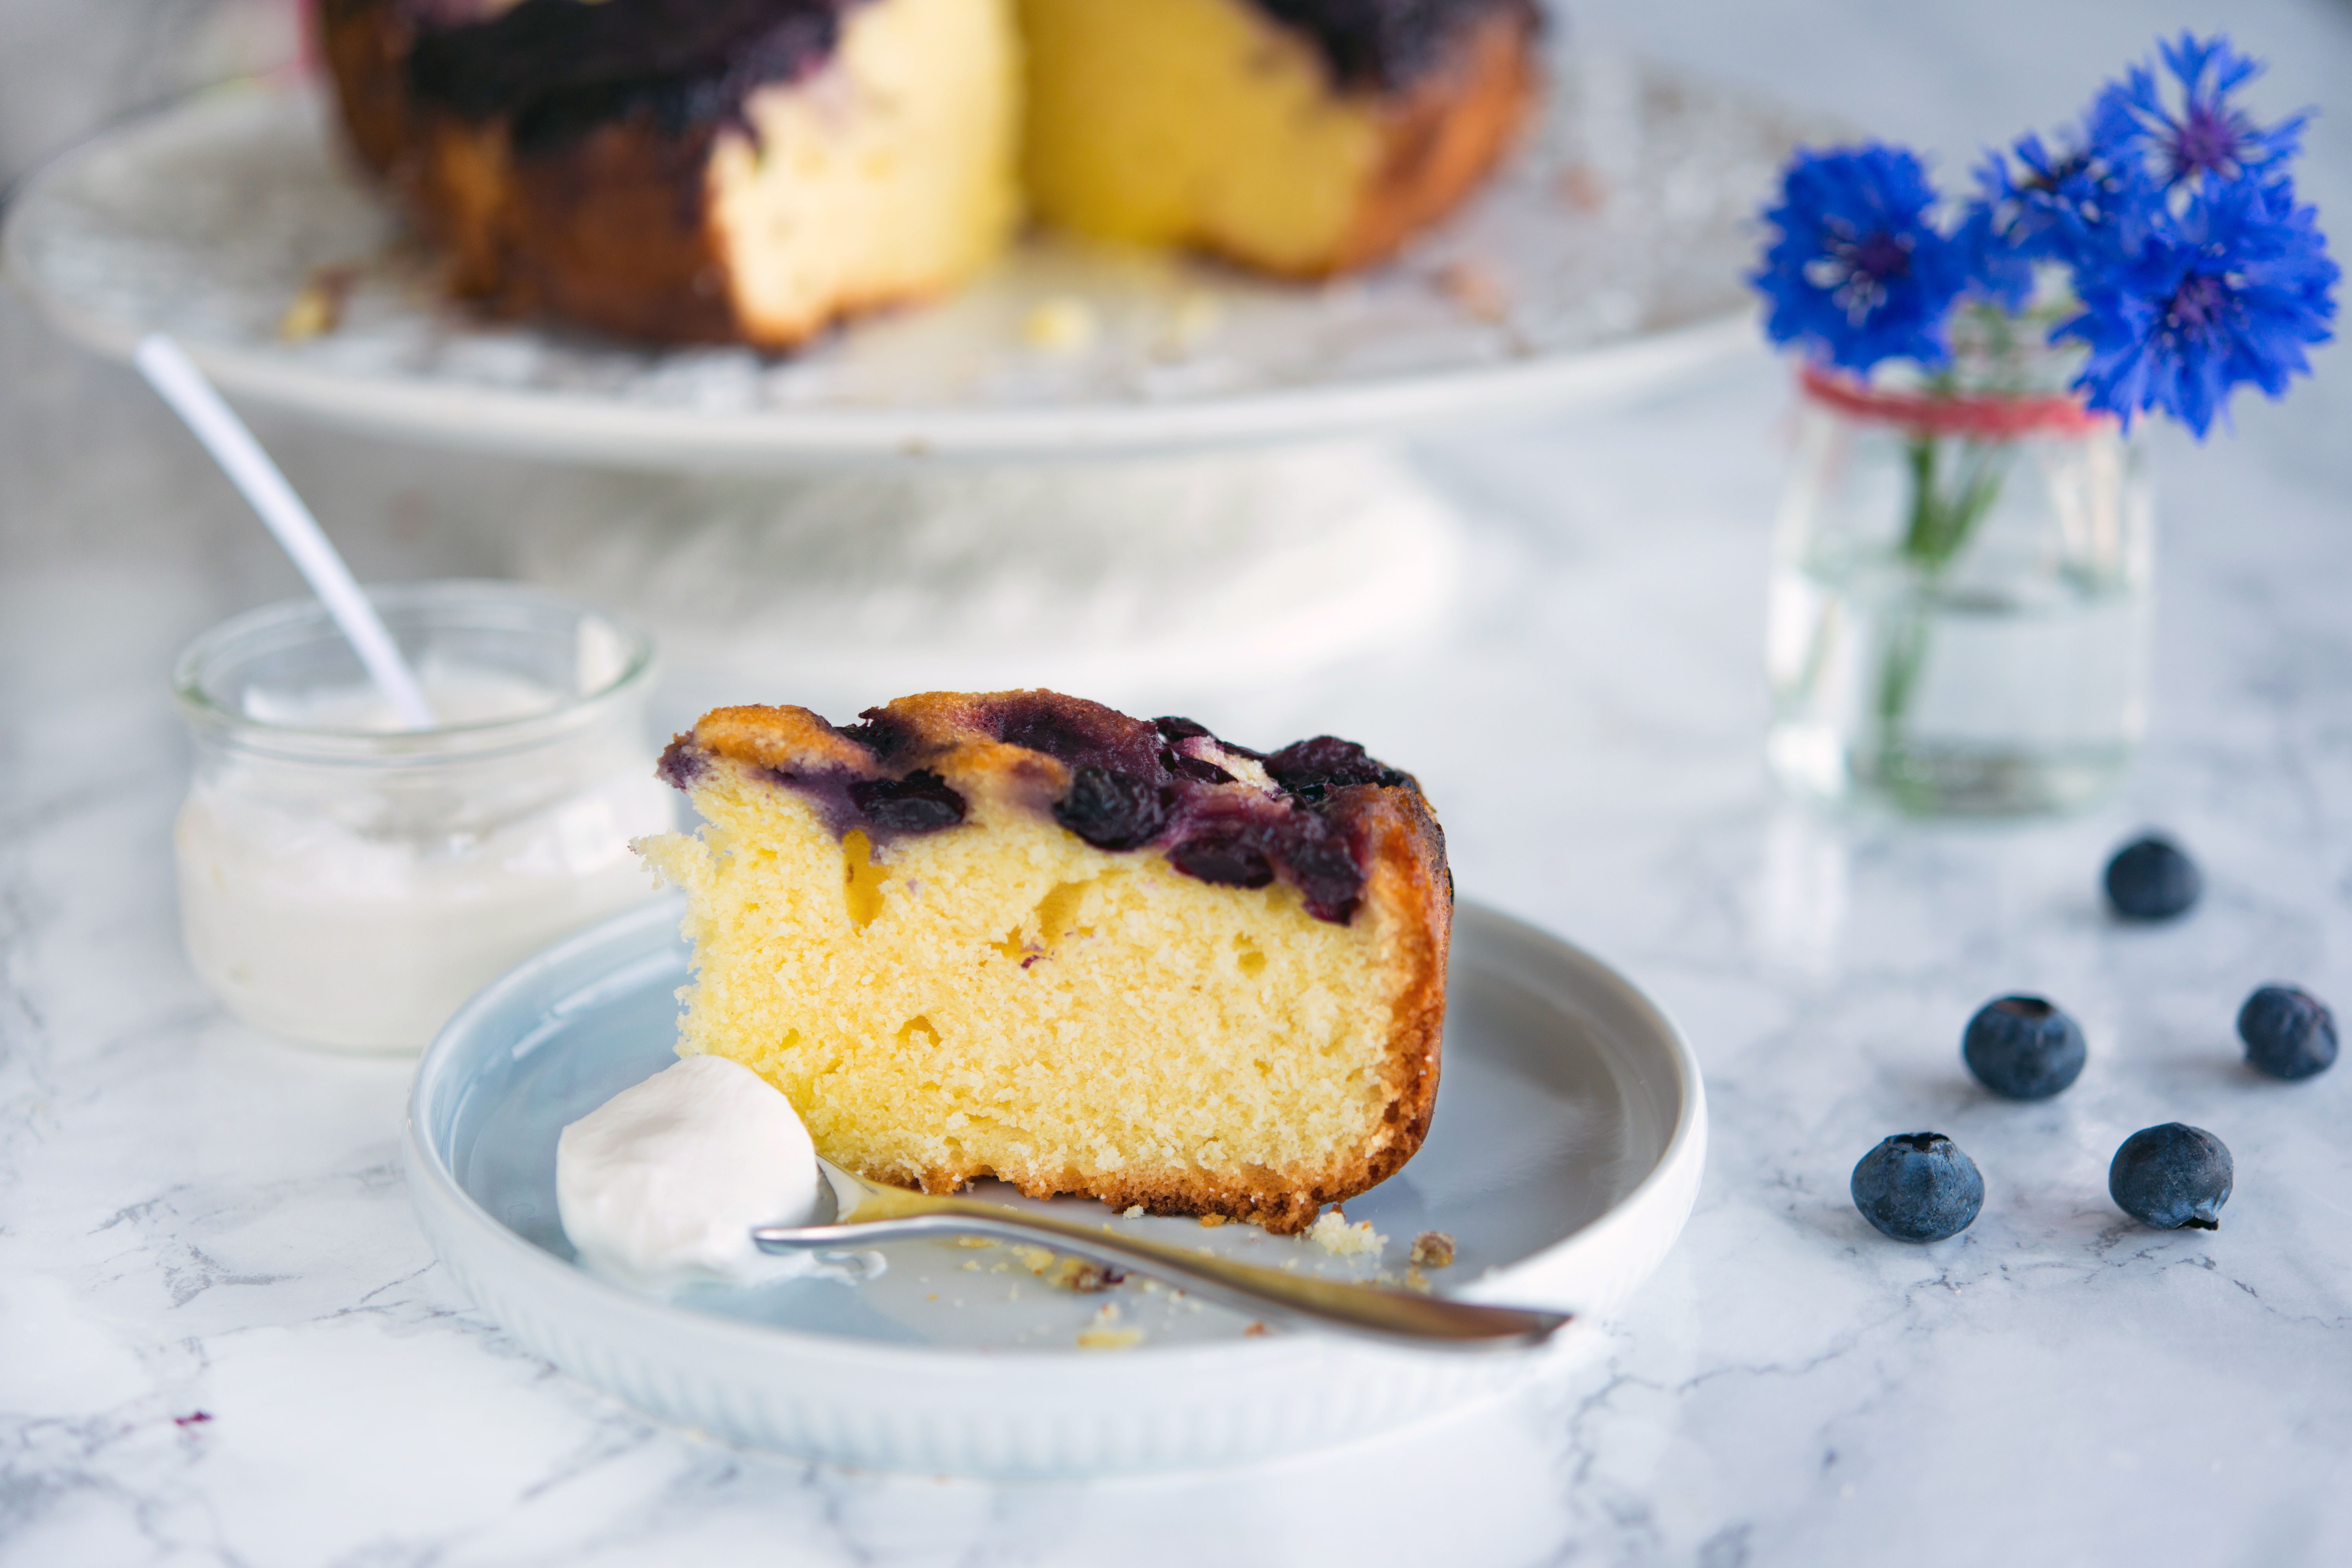 Blueberry and Lemon Upside-Down Cake